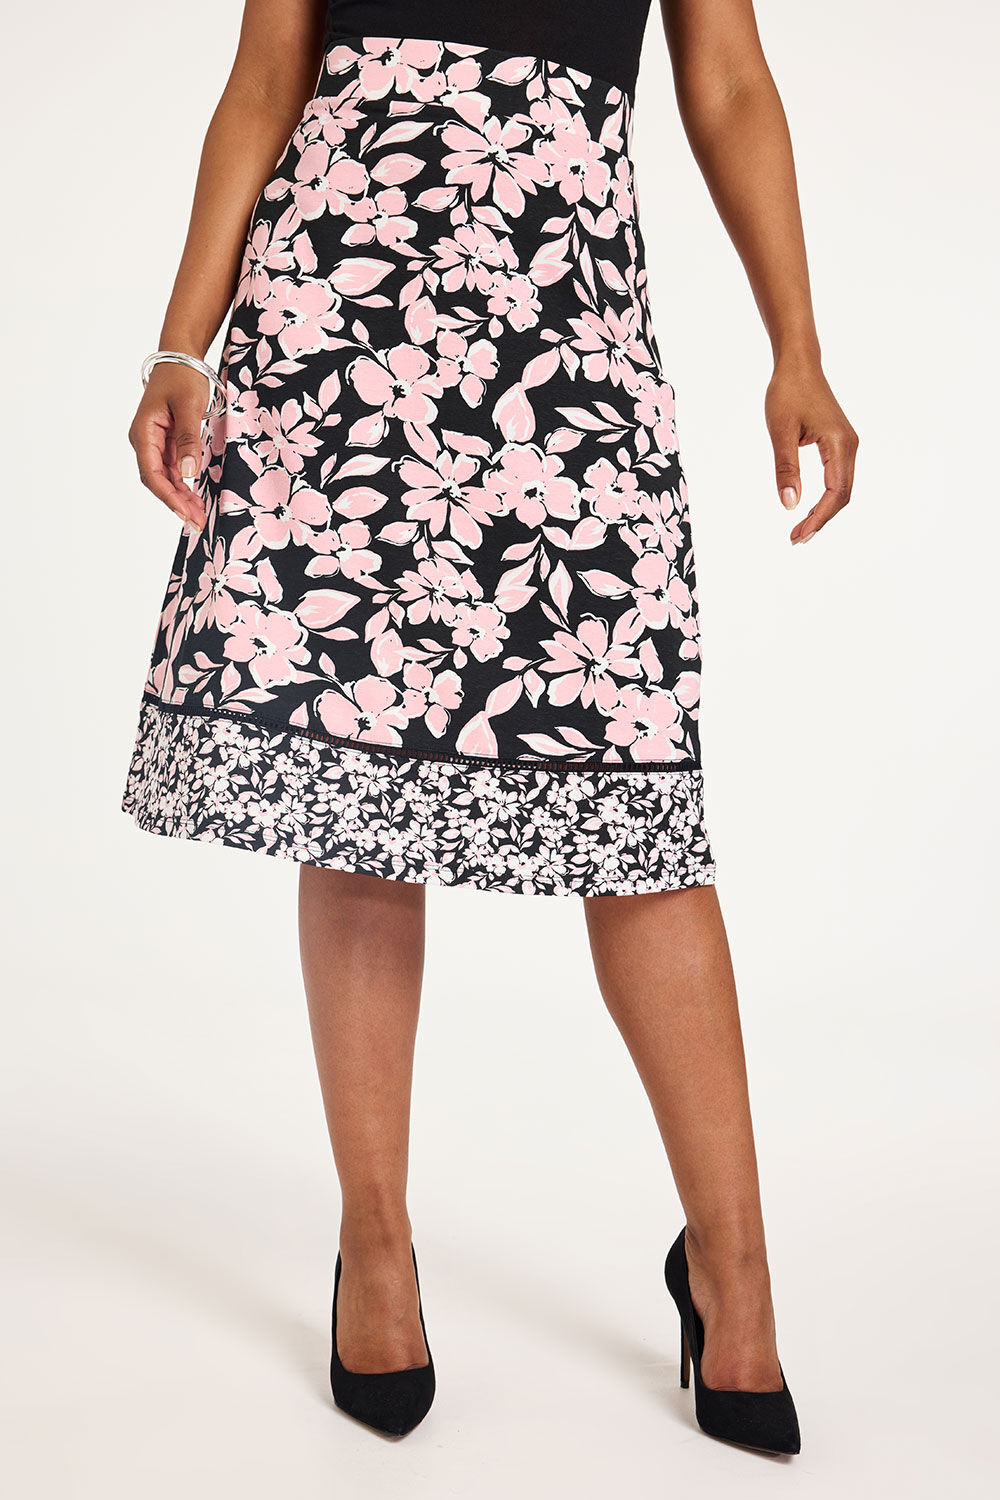 Bonmarche Black Floral Border Print A-Line Jersey Skirt, Size: 22